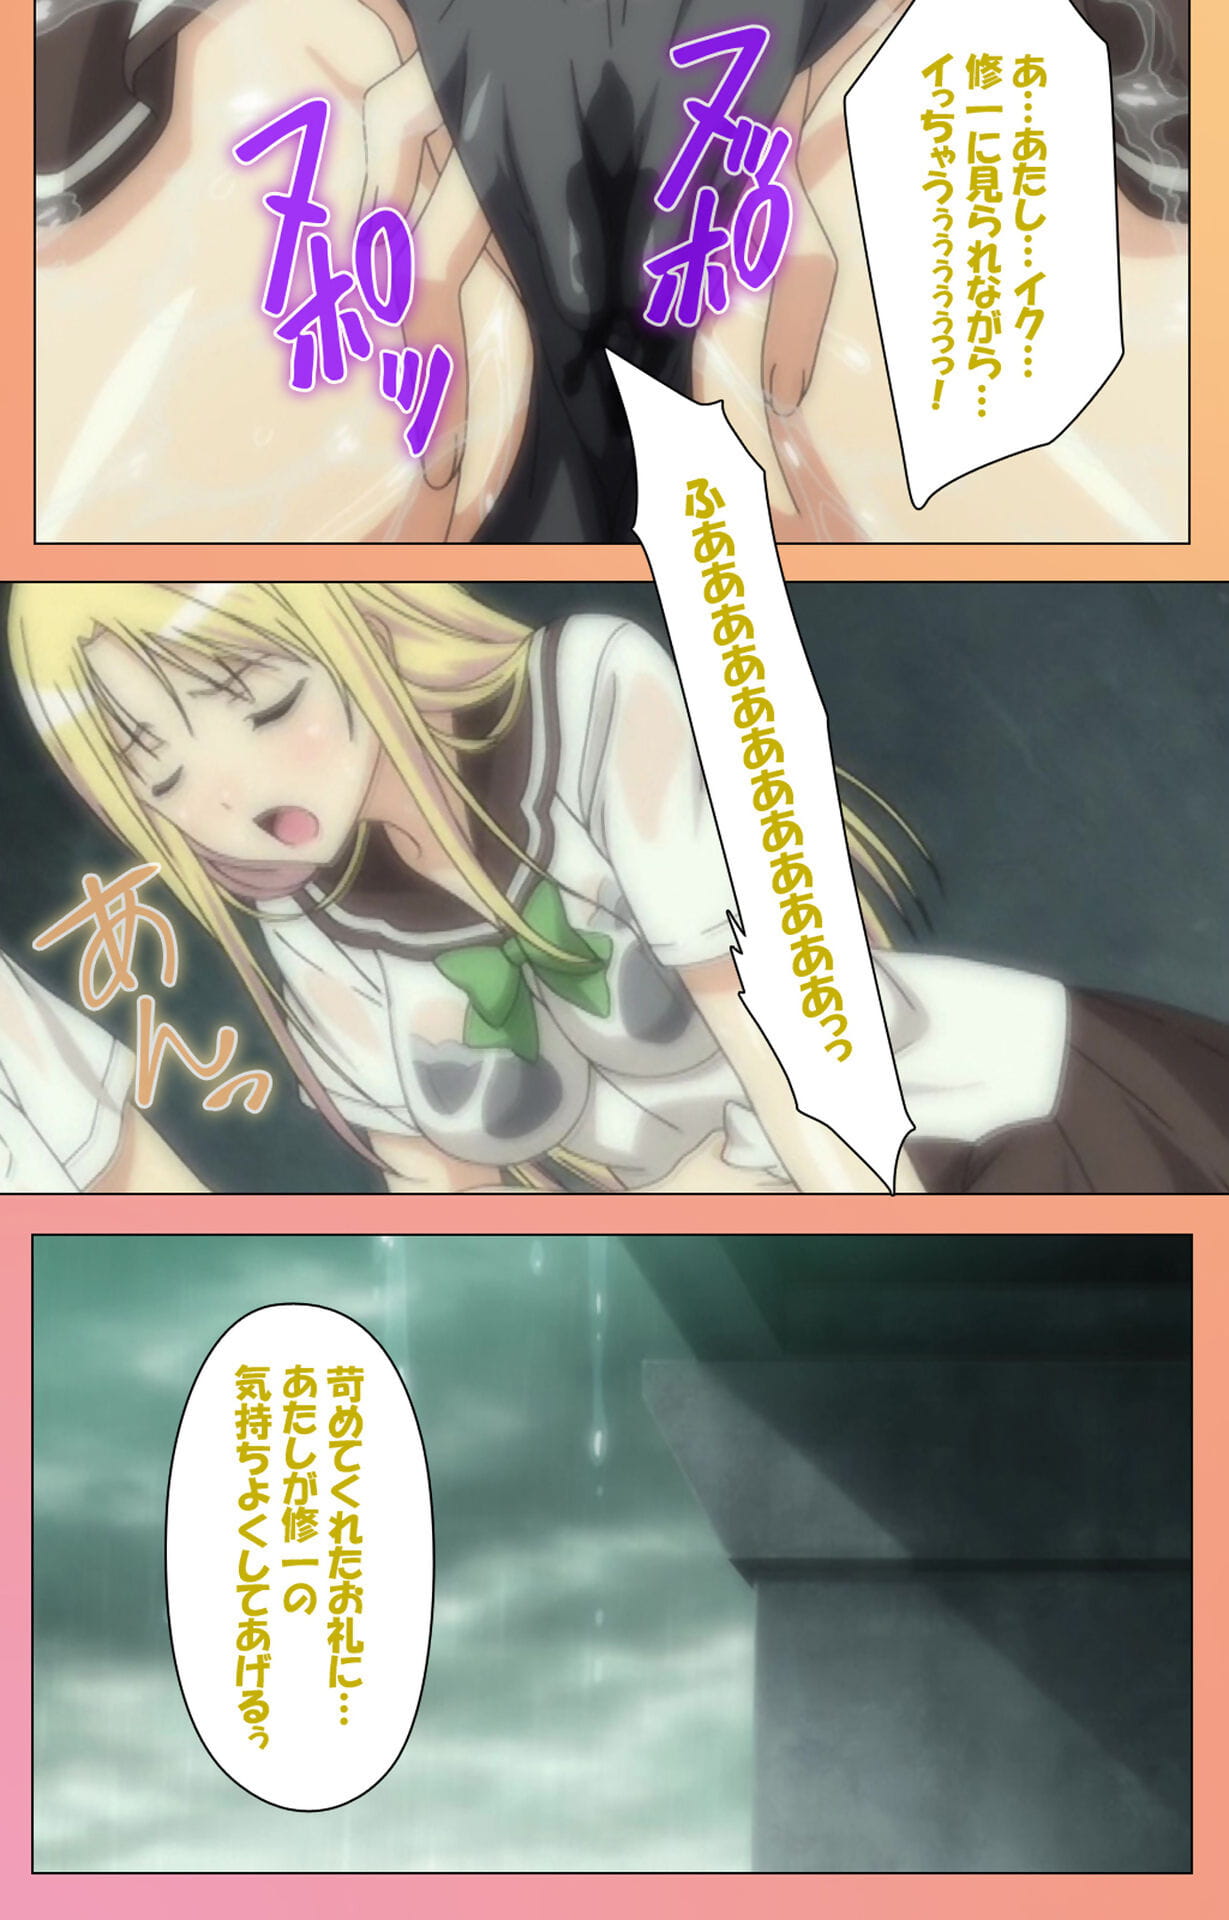 lune :हास्य: पूरा रंग seijin प्रतिबंध fault!!s विशेष पूरा प्रतिबंध हिस्सा 3